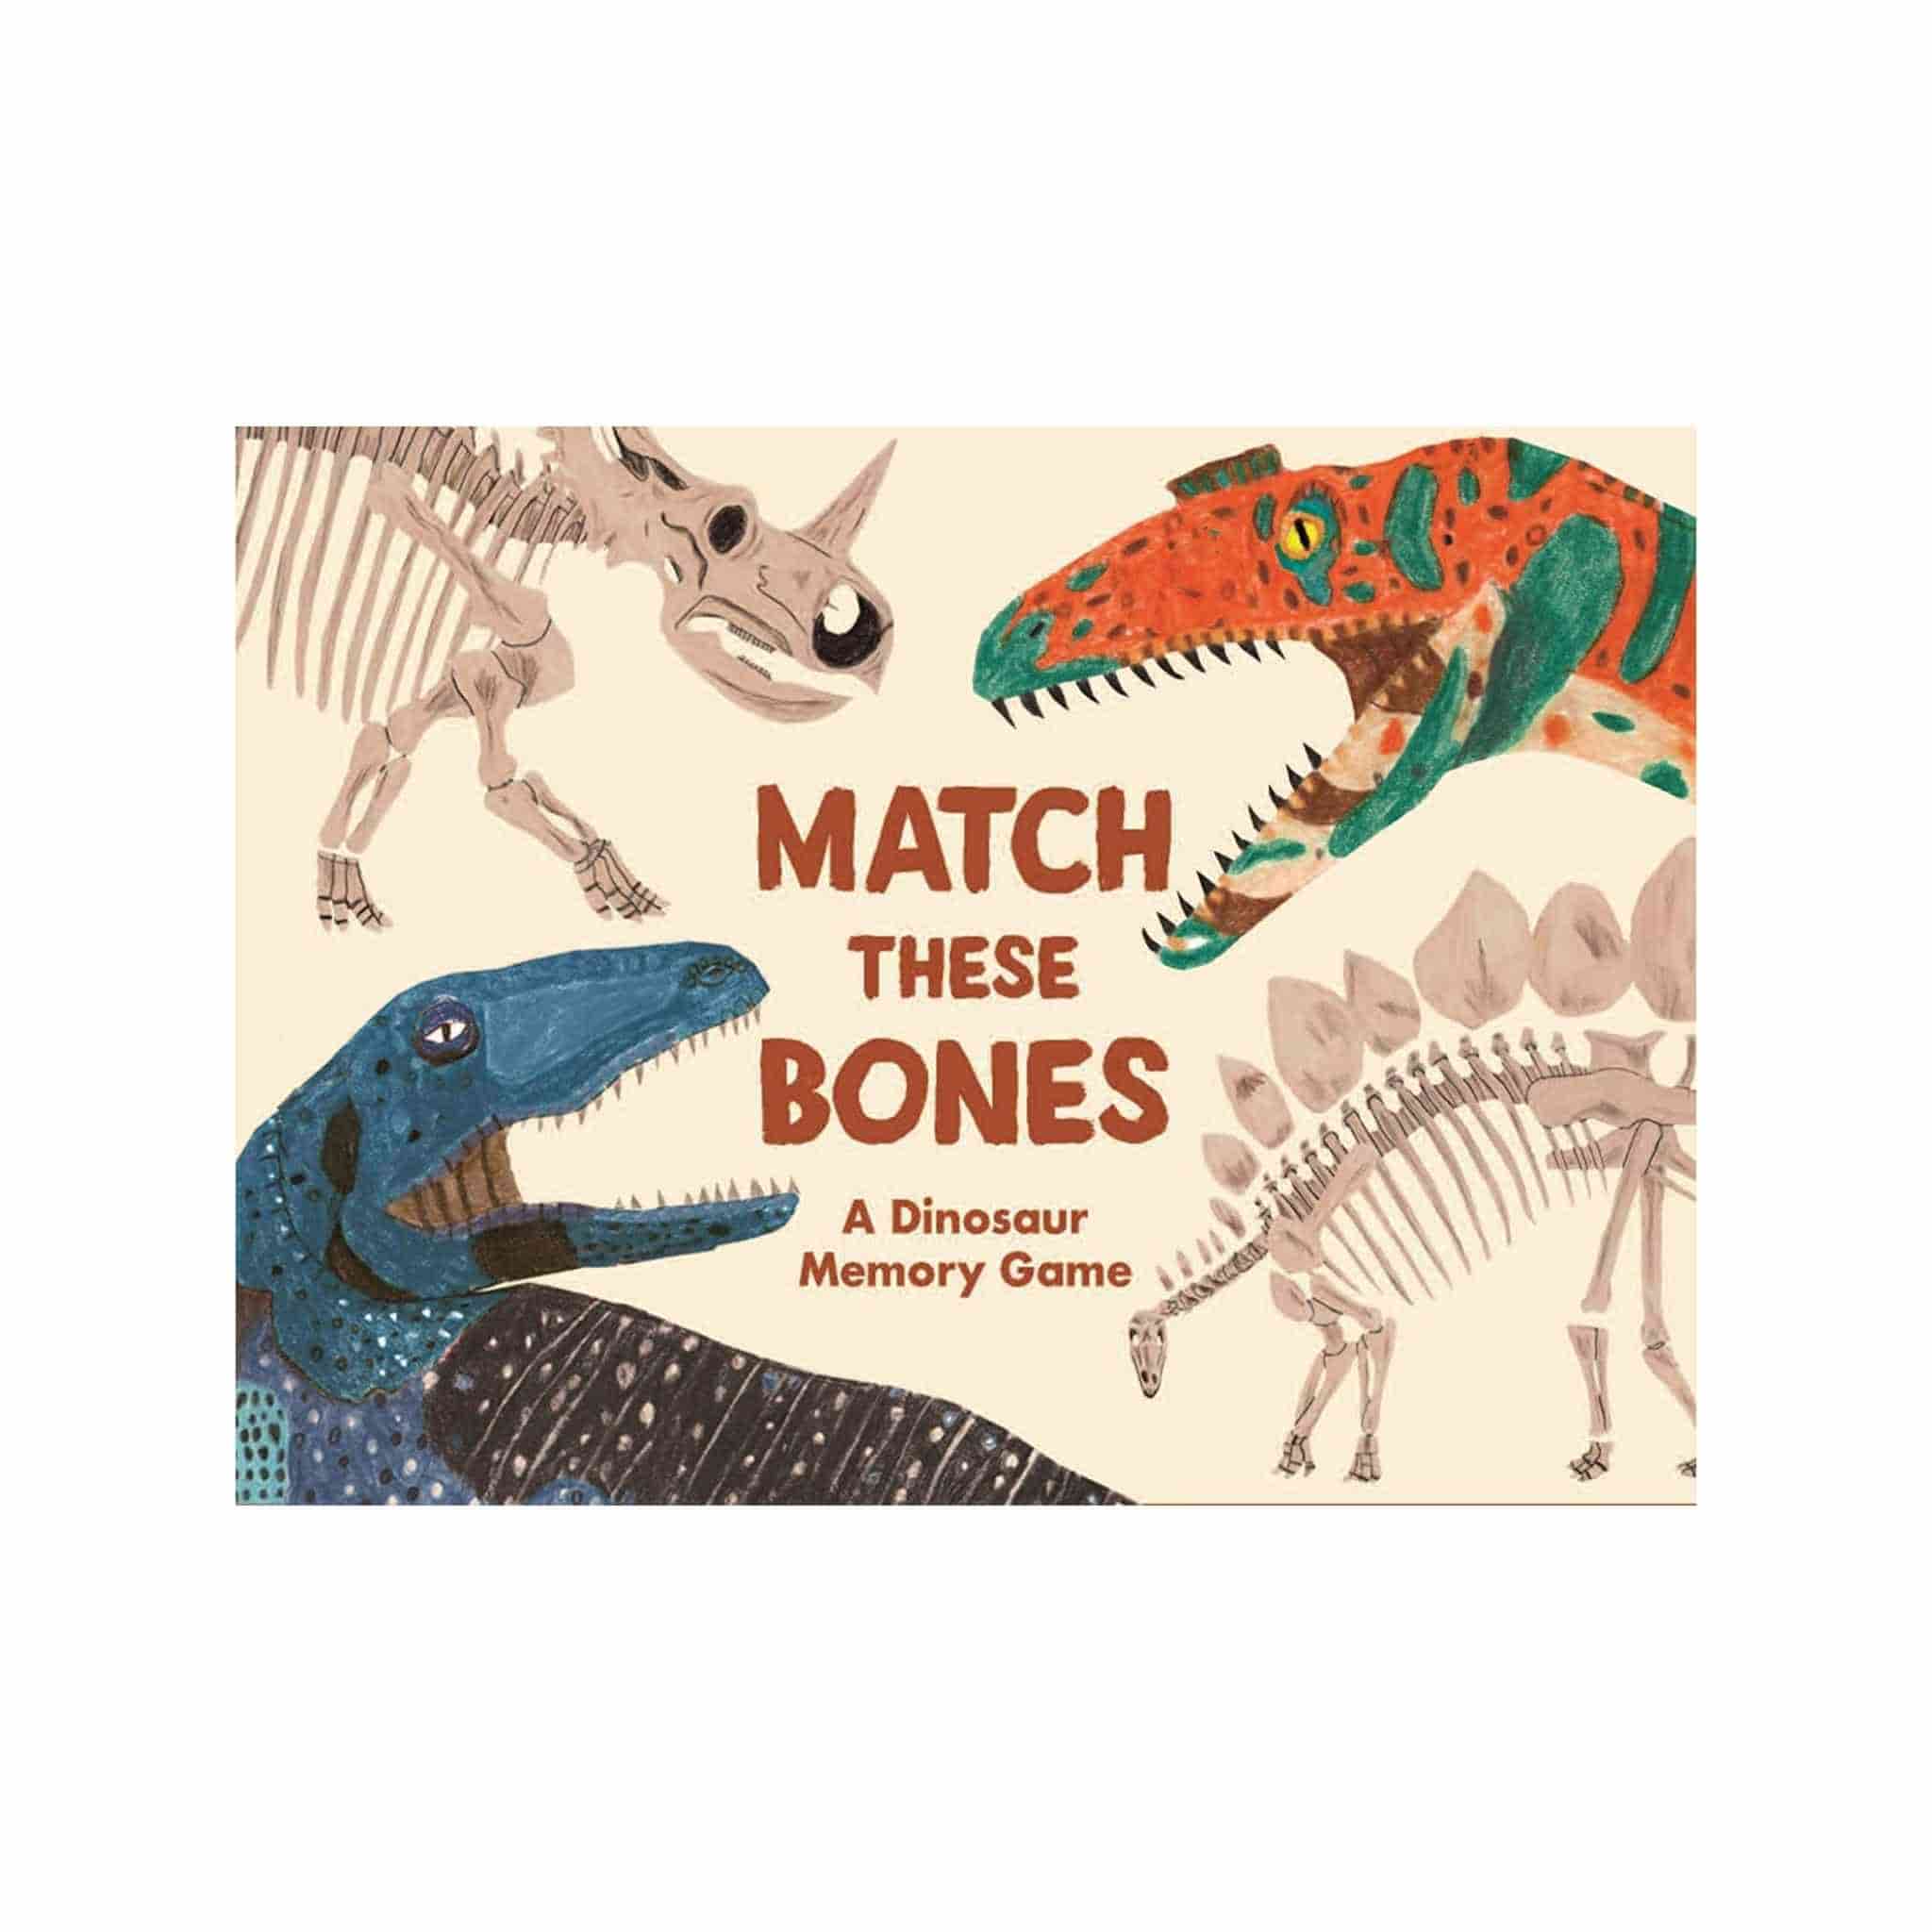 Dinosaur Memory Game Match These Bones